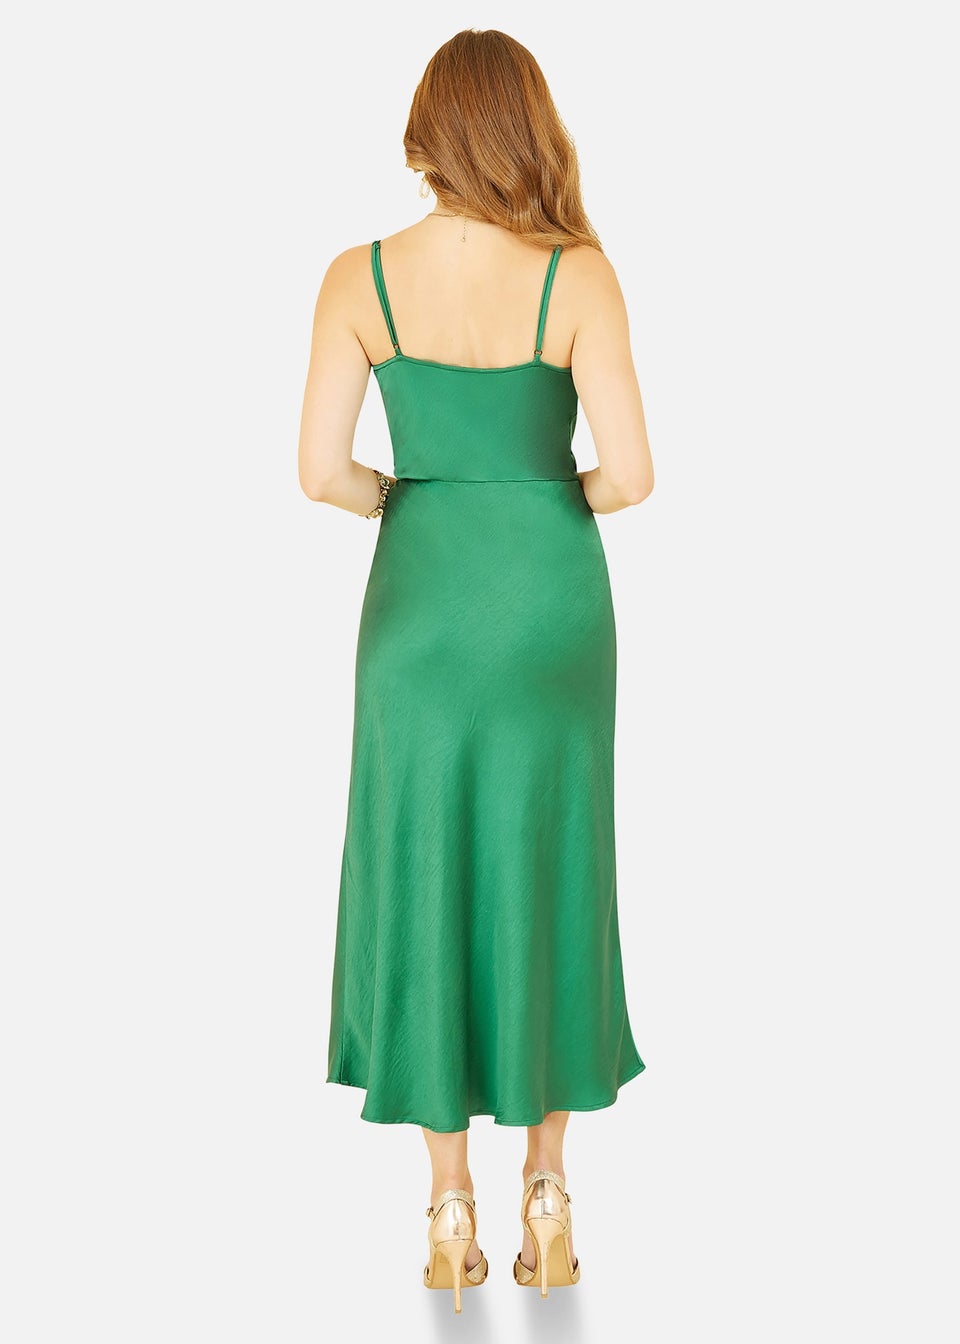 Yumi Green Satin Cowl Neck Slip Dress